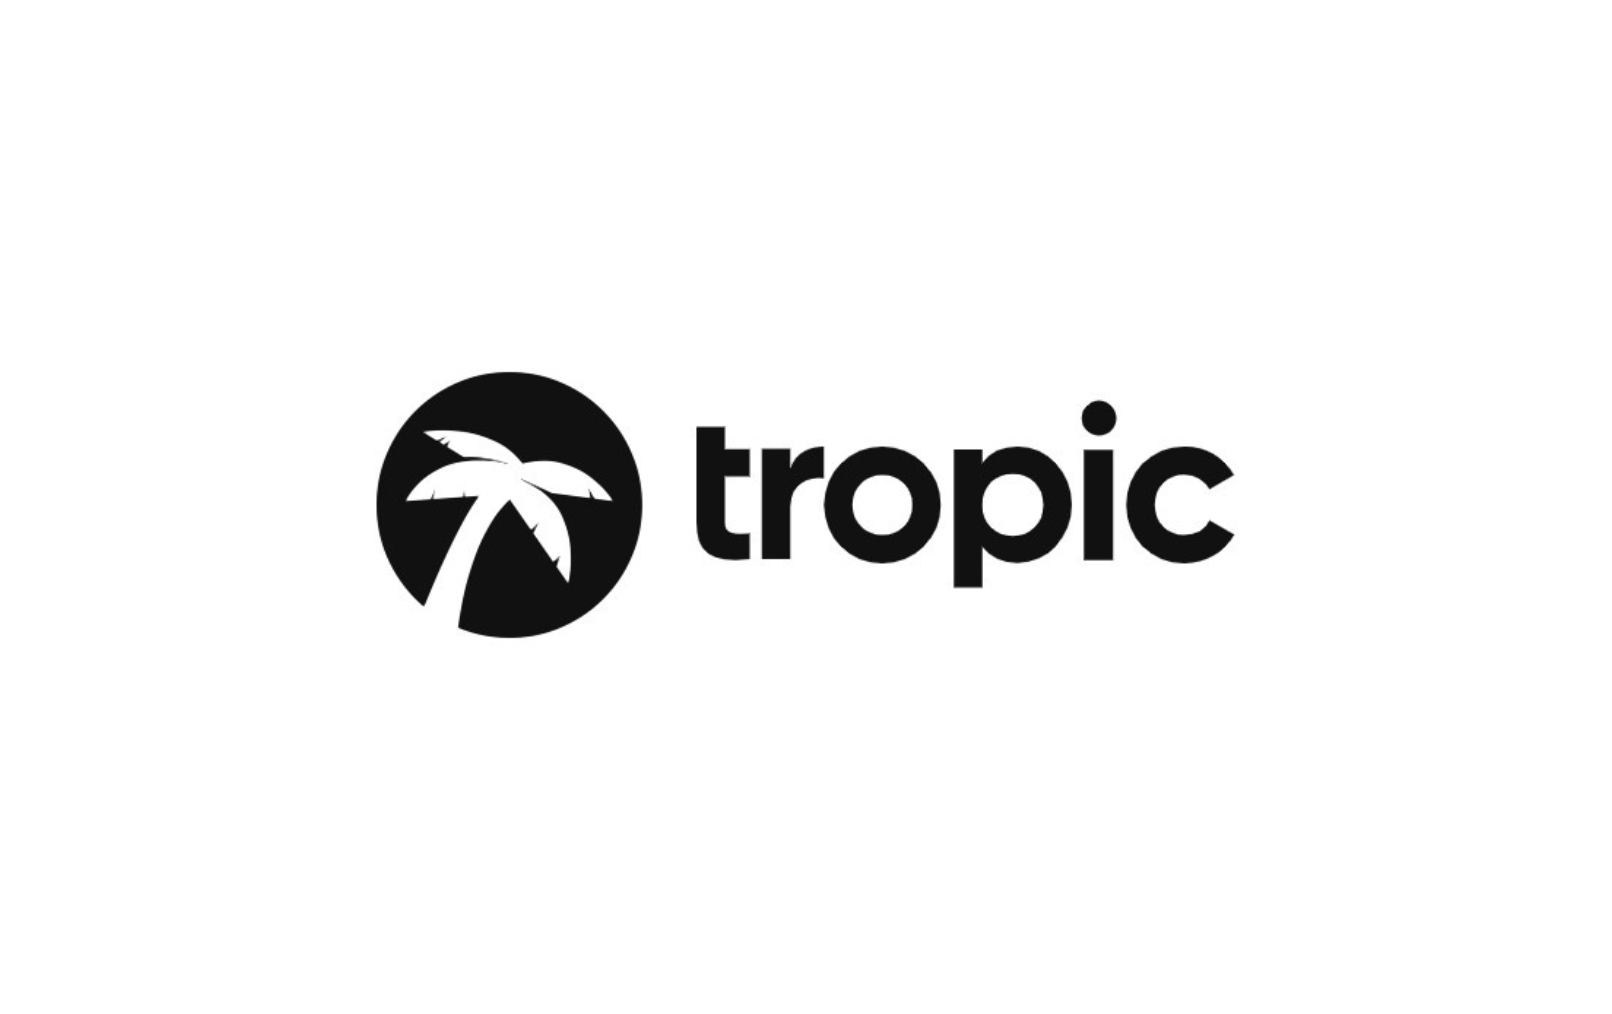 Tropic Logo